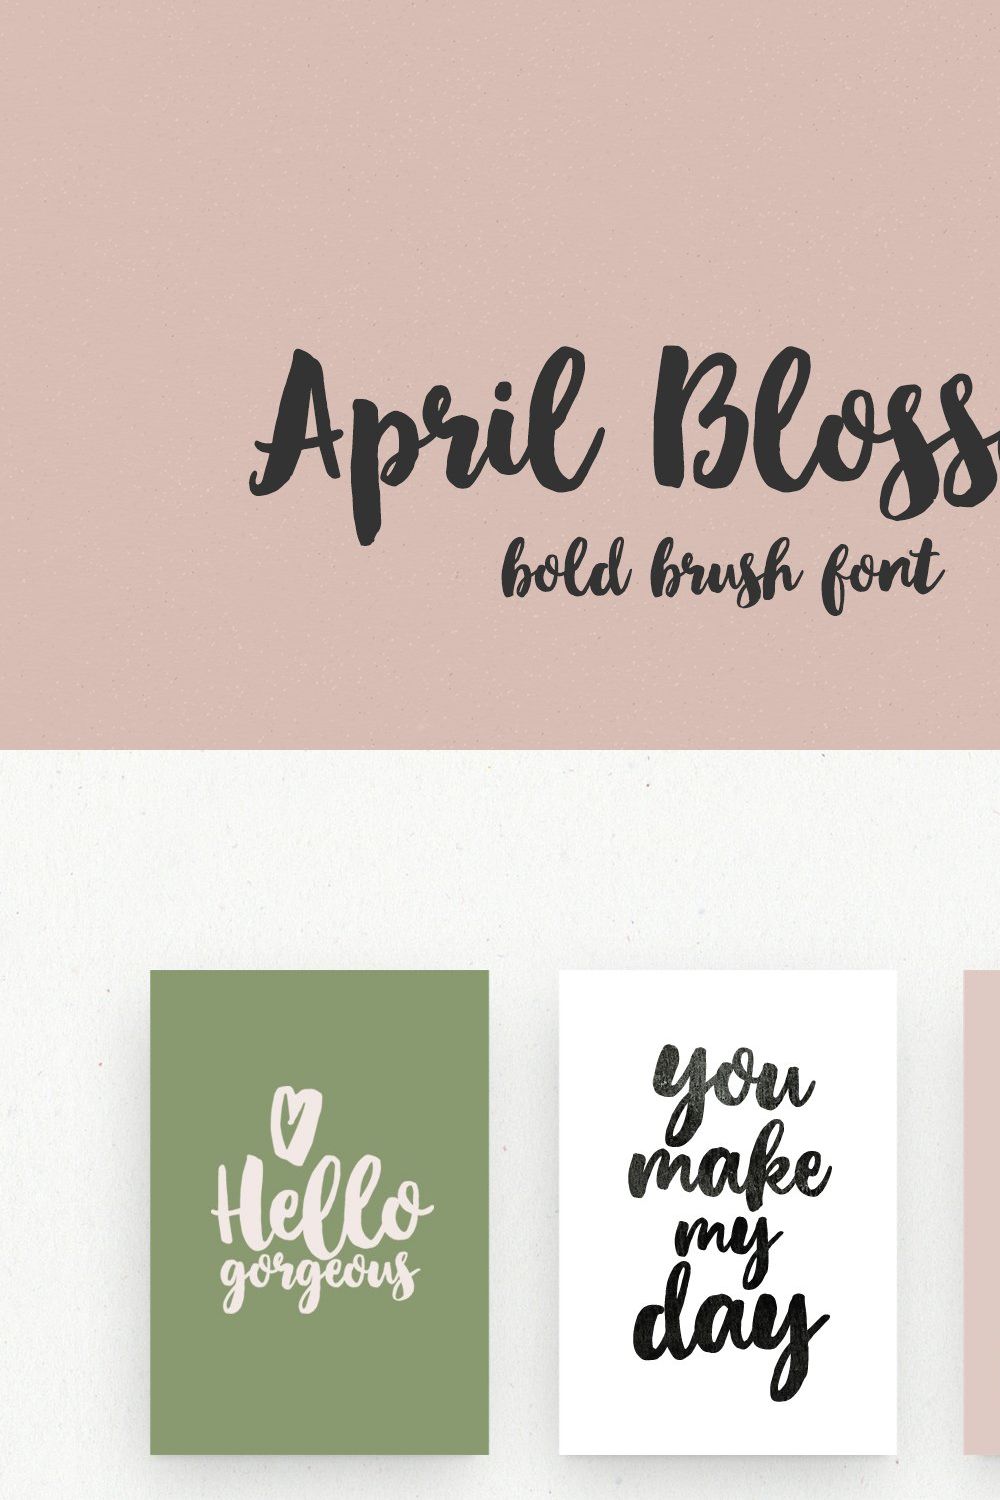 April Blossom bold brush font pinterest preview image.